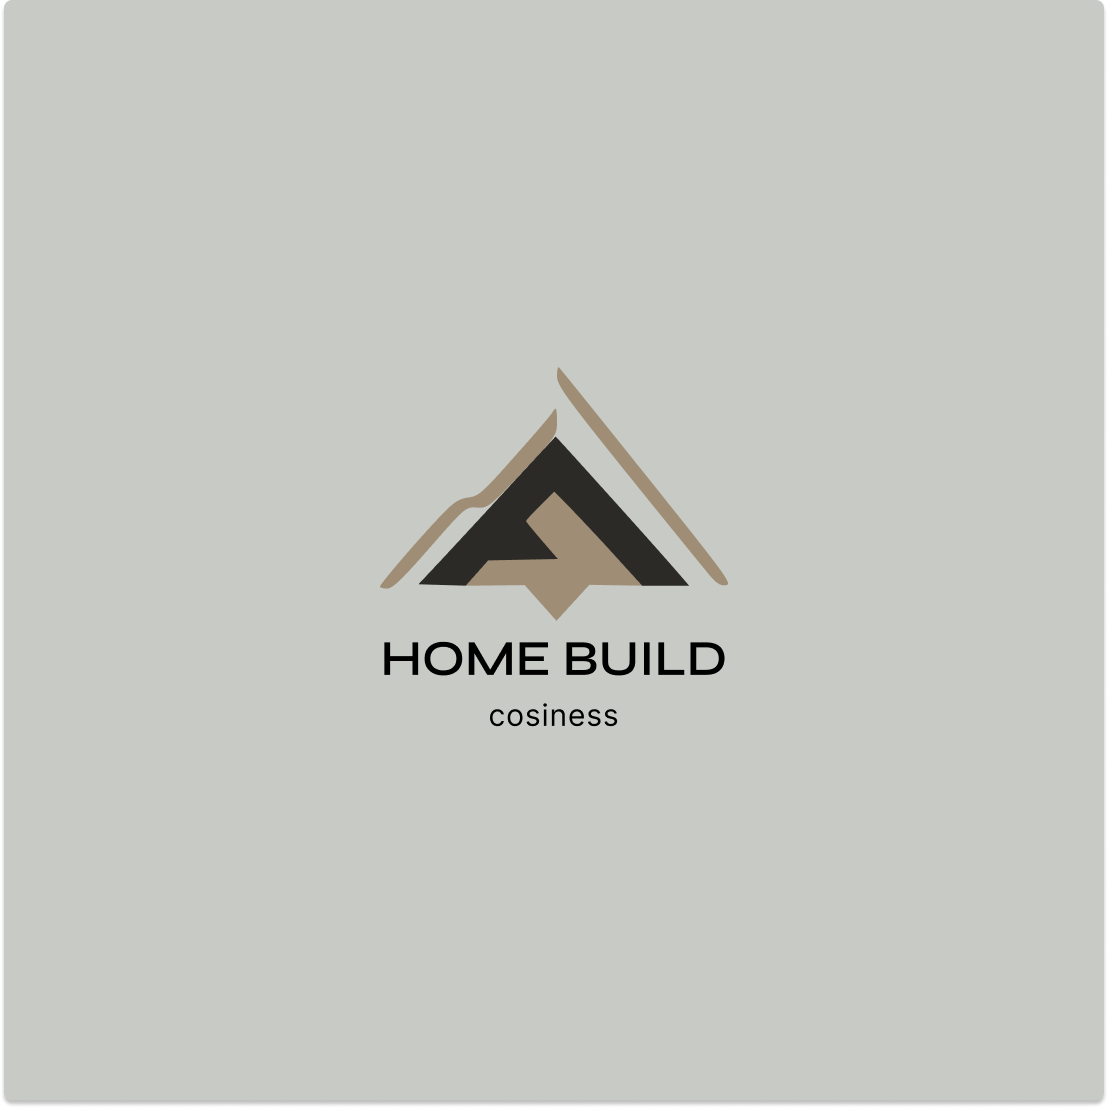 Logo for a construction company Home Build cover image.